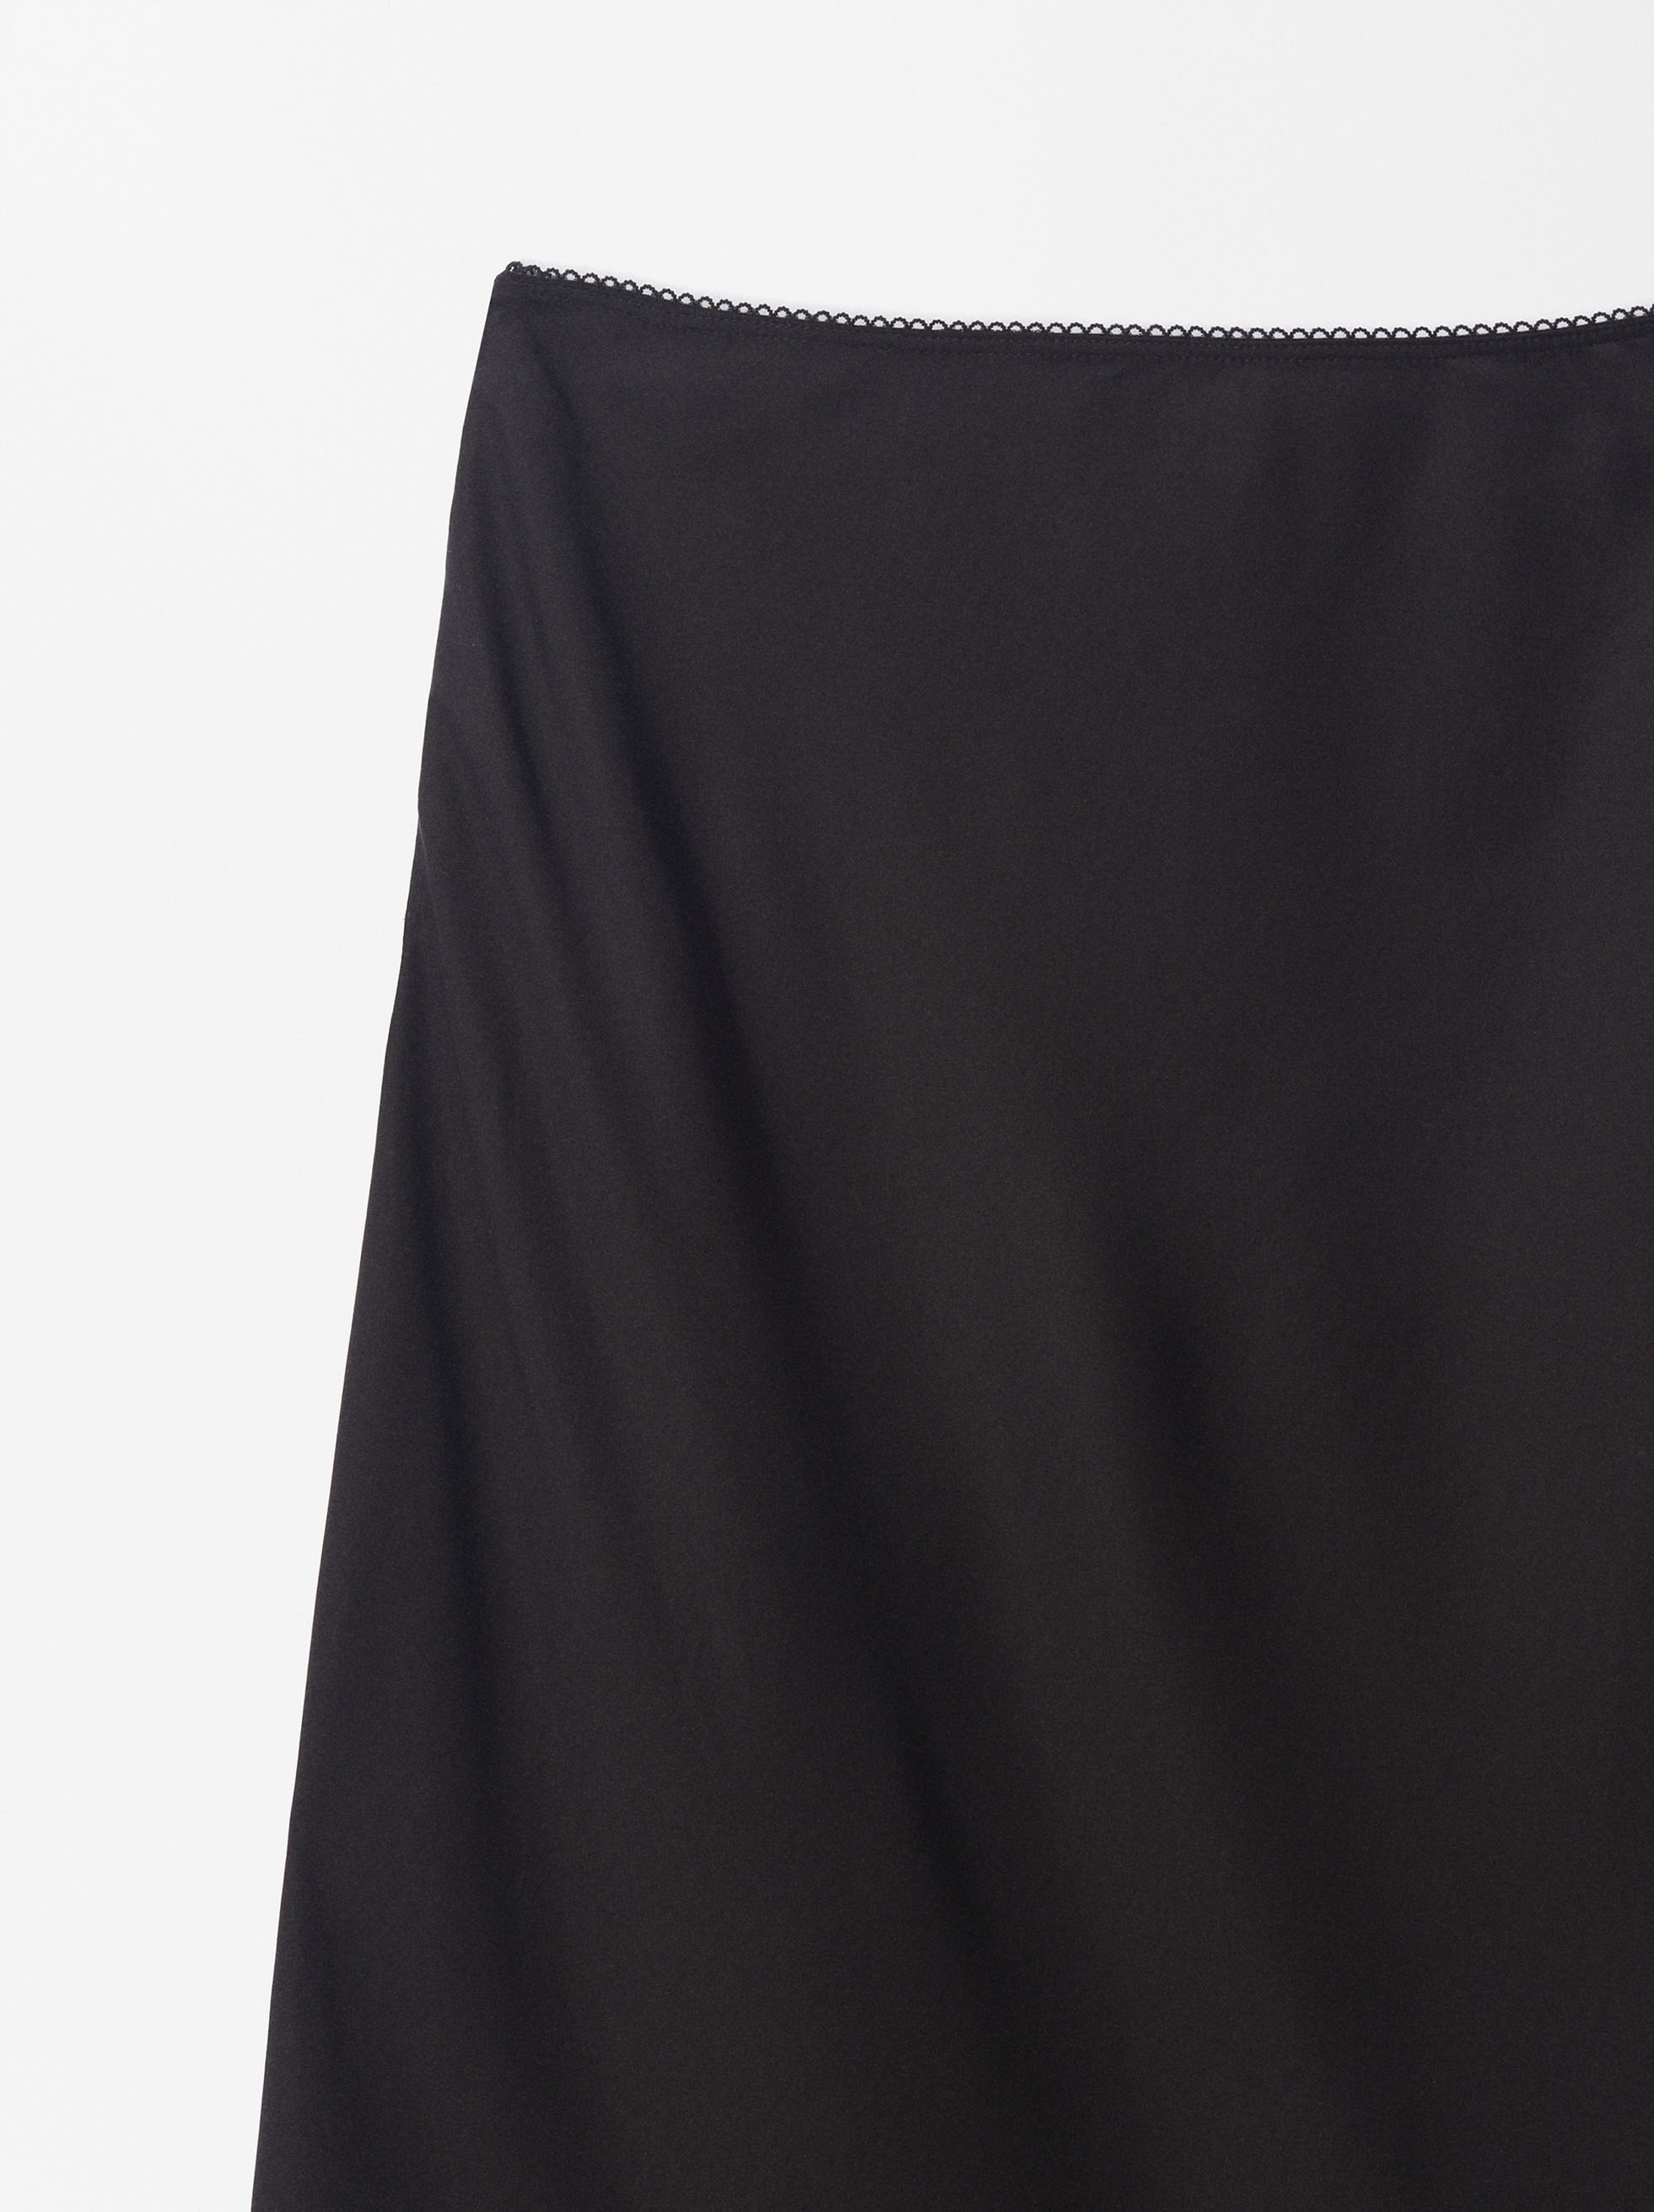 Midi Skirt With Elastic Waistband image number 5.0